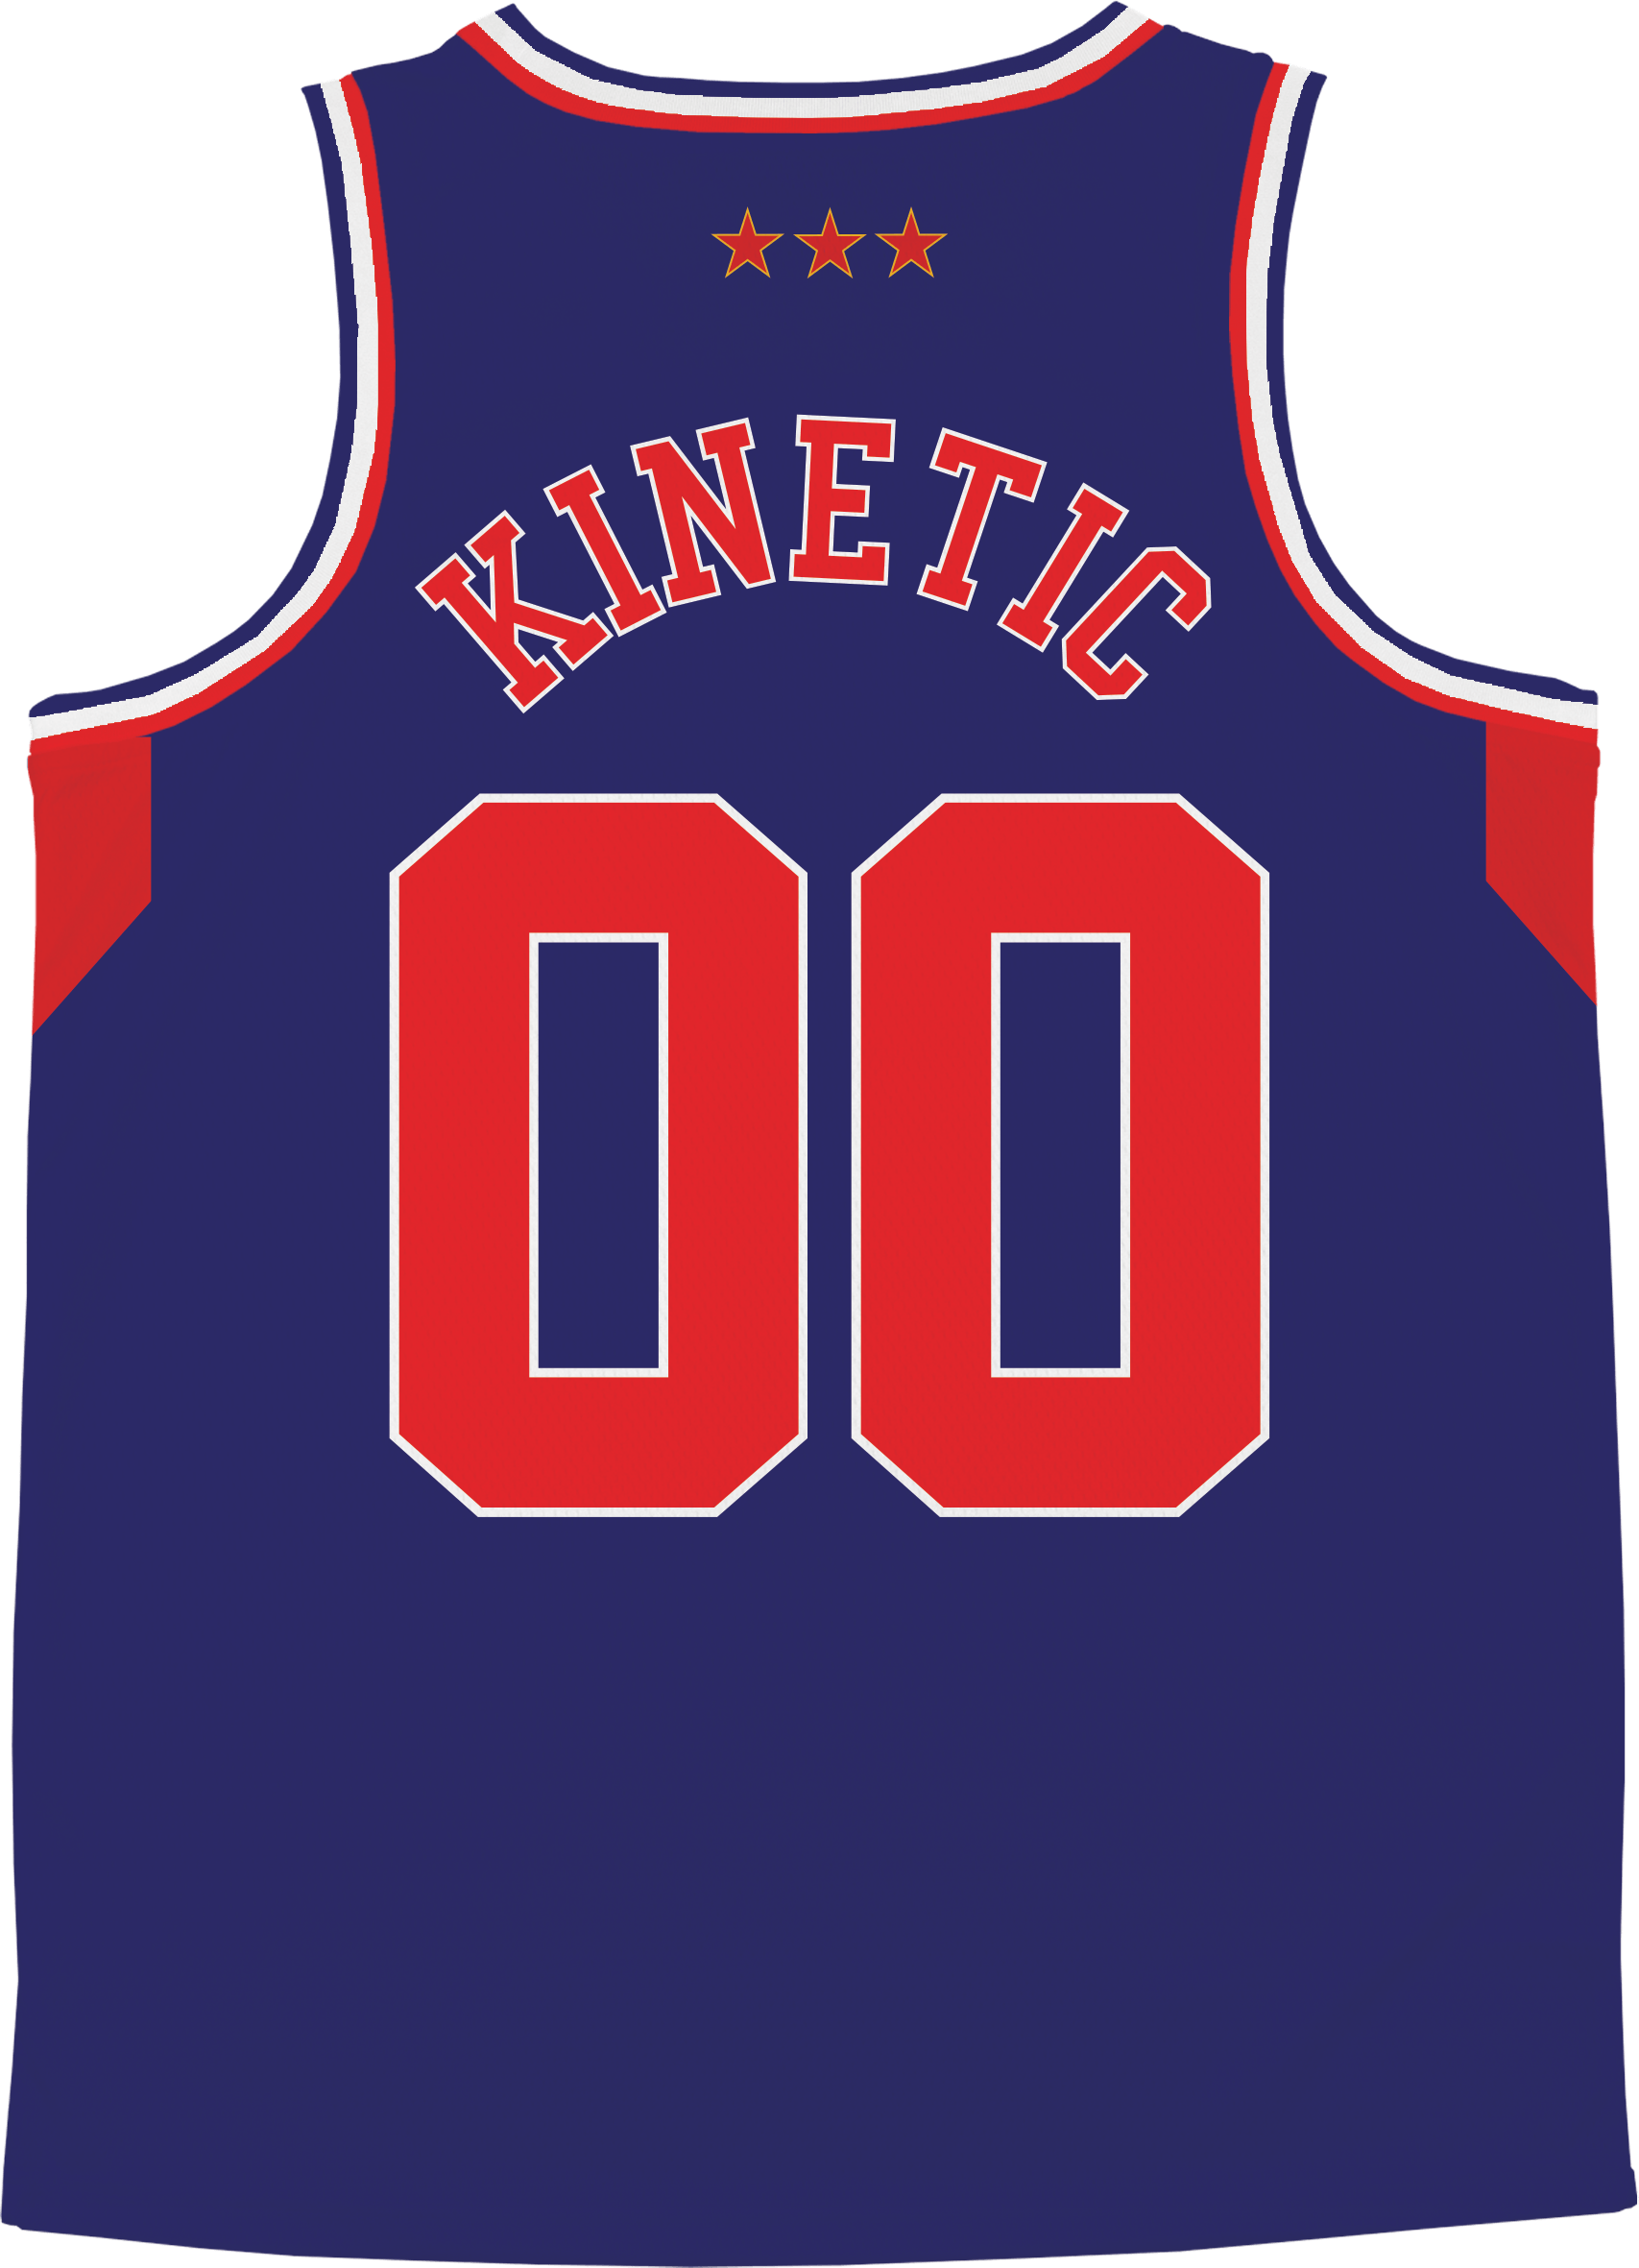 Kinetic Society LLC Sigma Nu - Bubble Gum Basketball Jersey